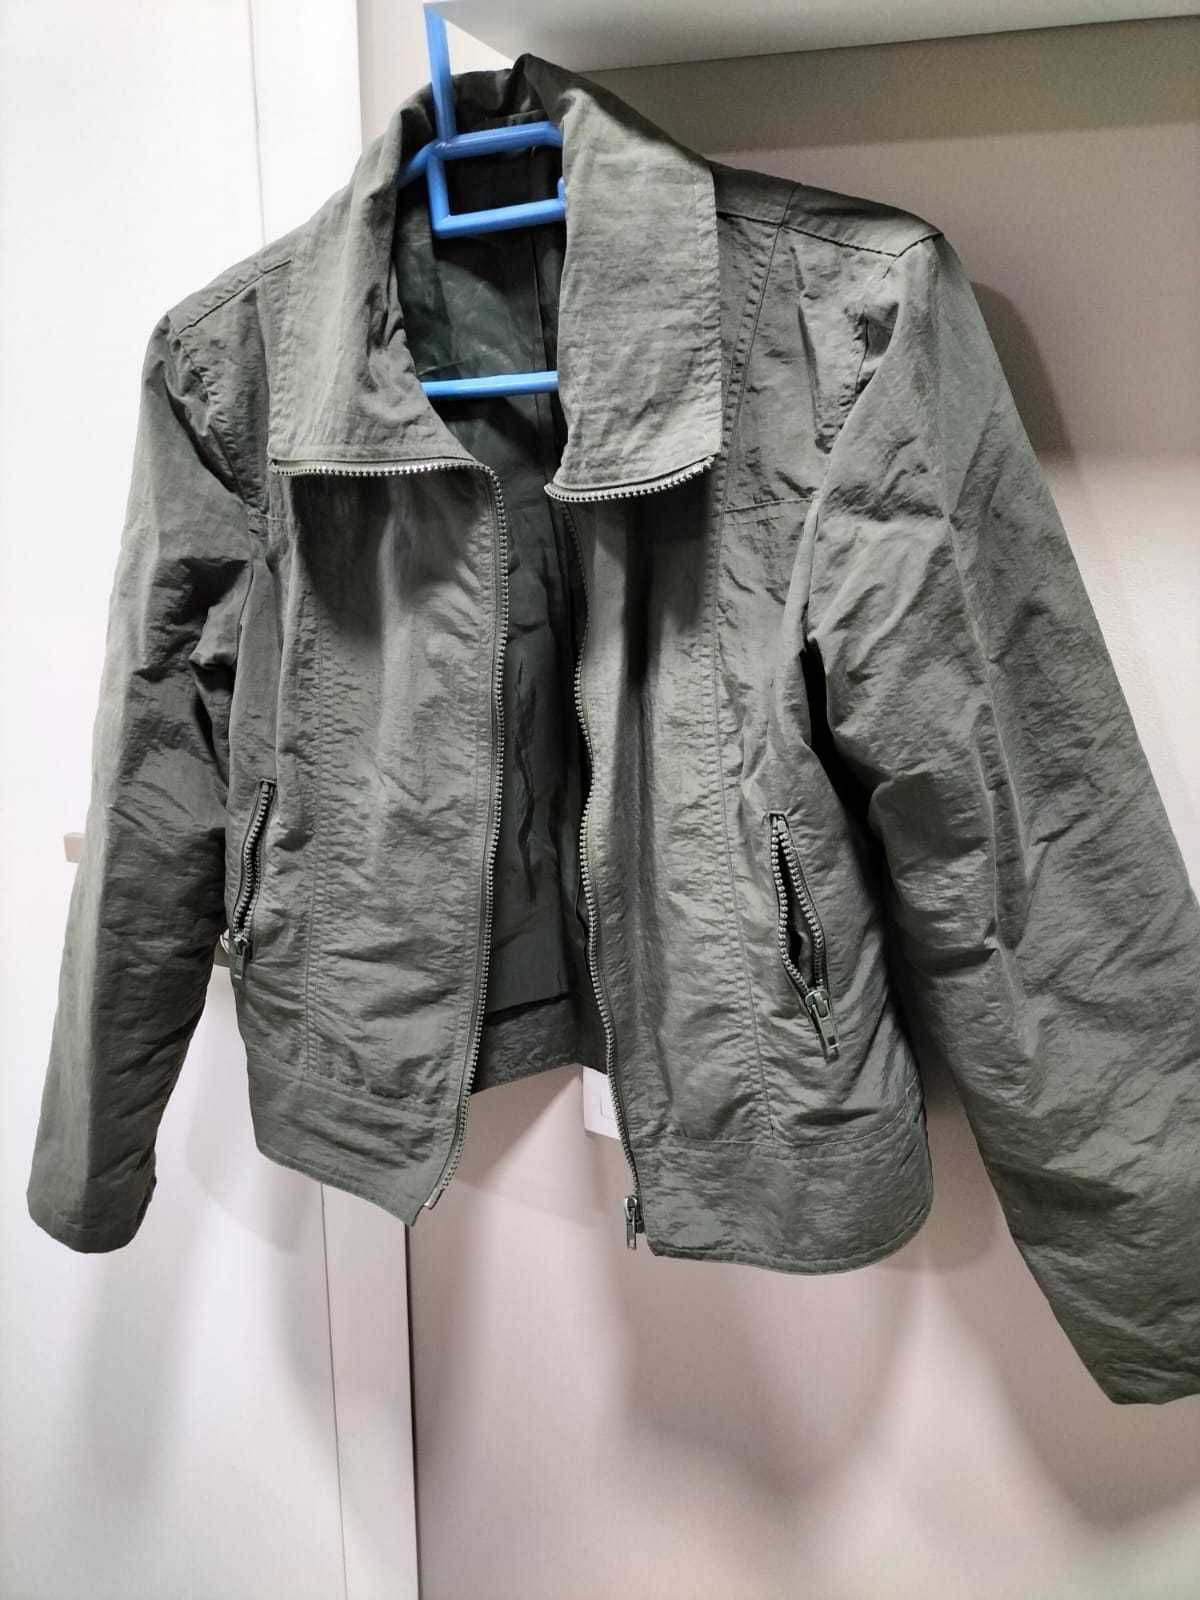 продам дешево куртку плащевку цвета хаки, 44-46 размер